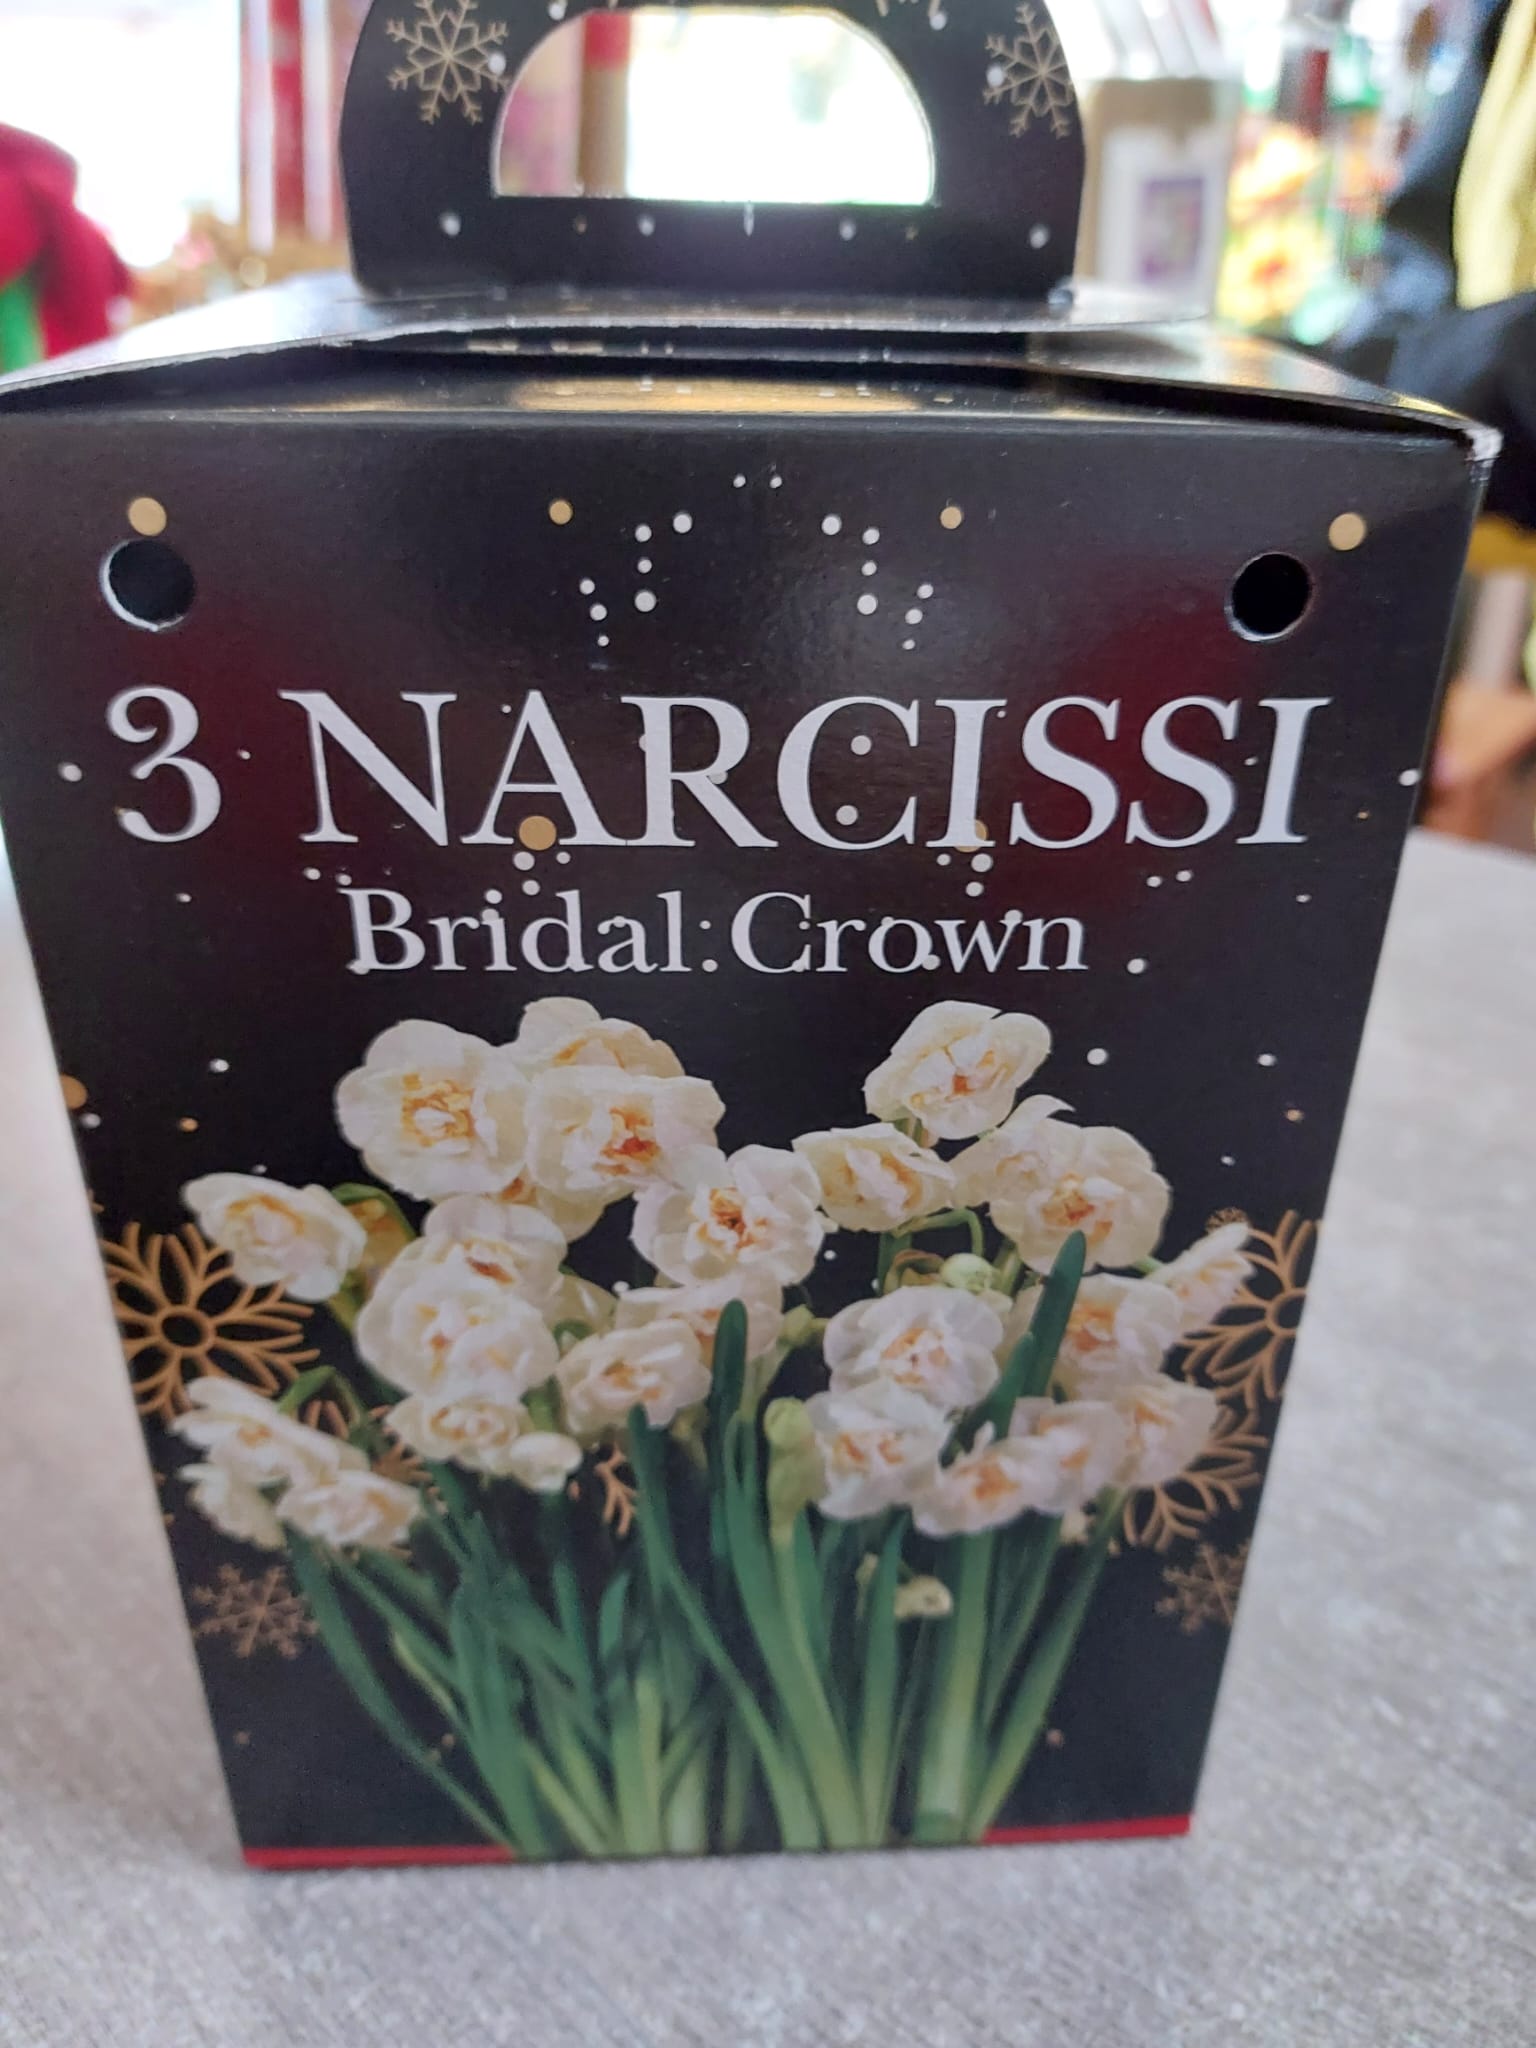 Narcissi Bridal Crown Gift Box Set (Spring Flowers)£10.50